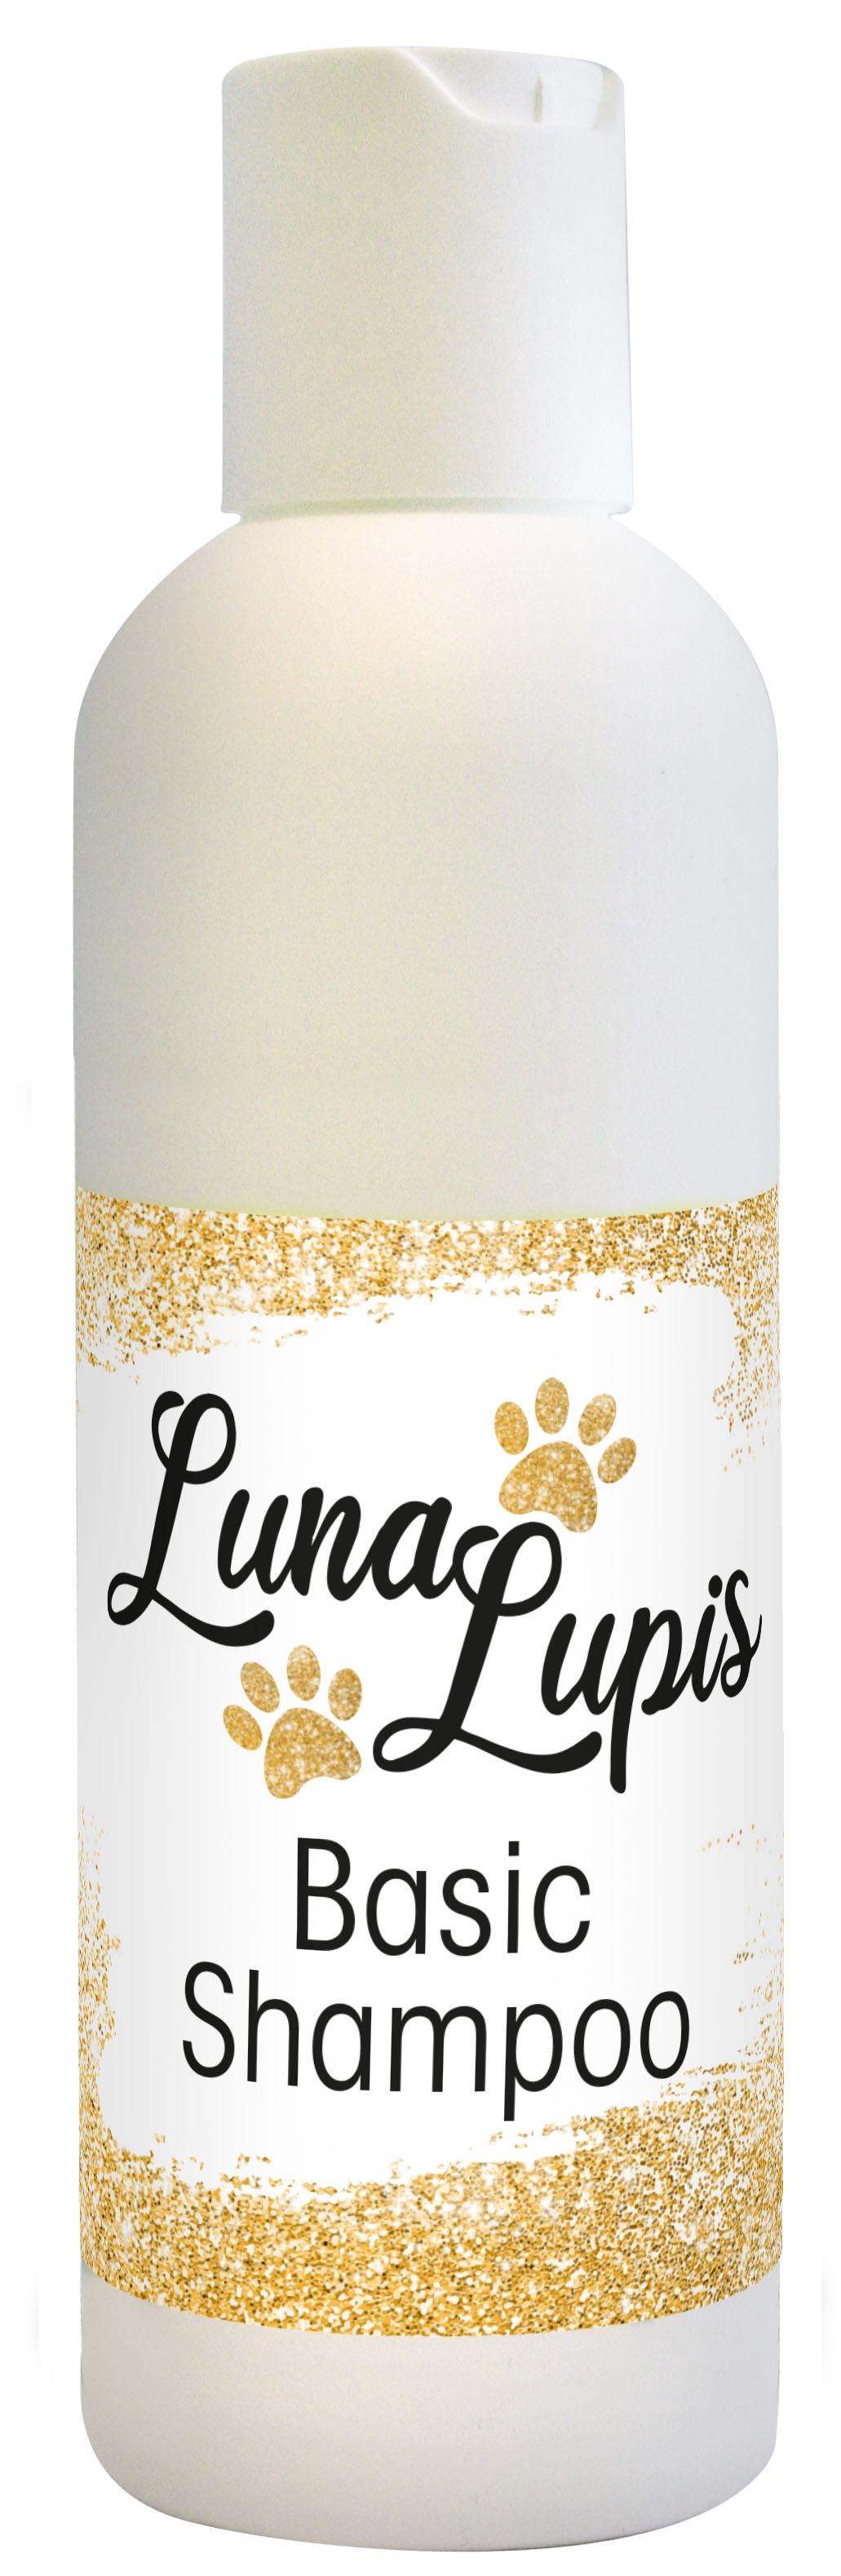 LunaLupis Basic Shampoo 100 ml